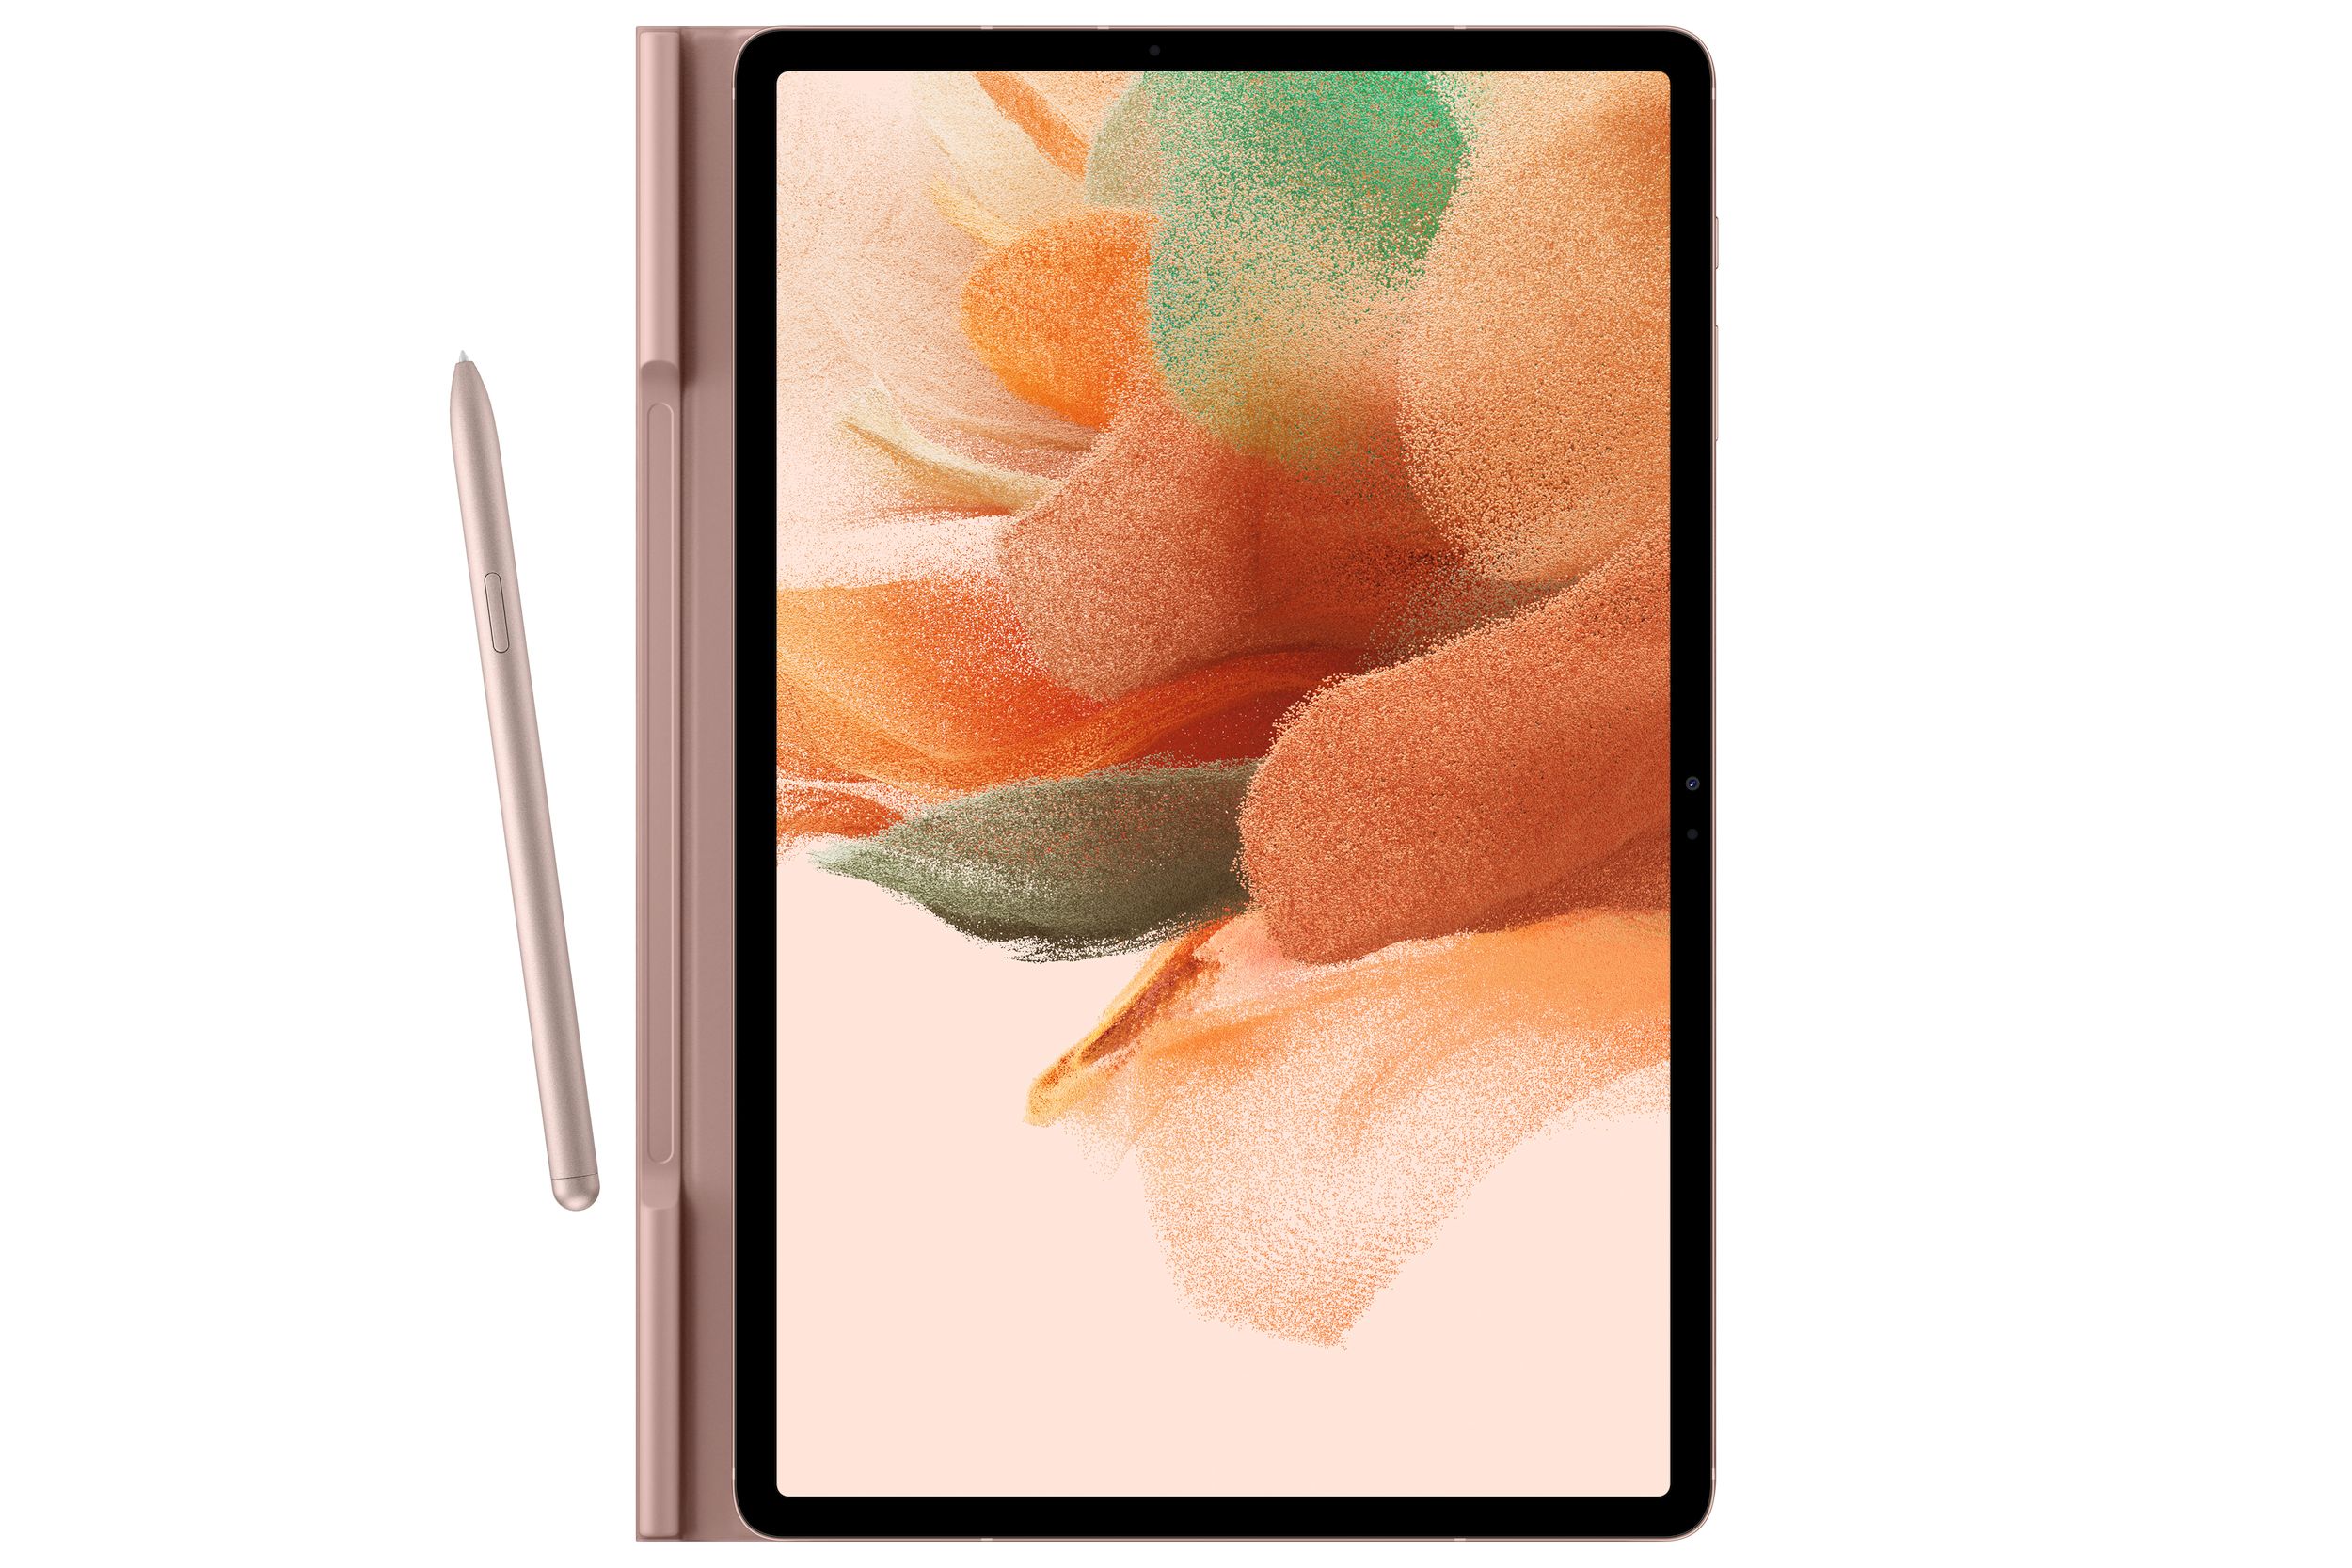 No Galaxy Tab S7 + Lite: Samsung's new tablet will be named Galaxy Tab S7 XL Lite